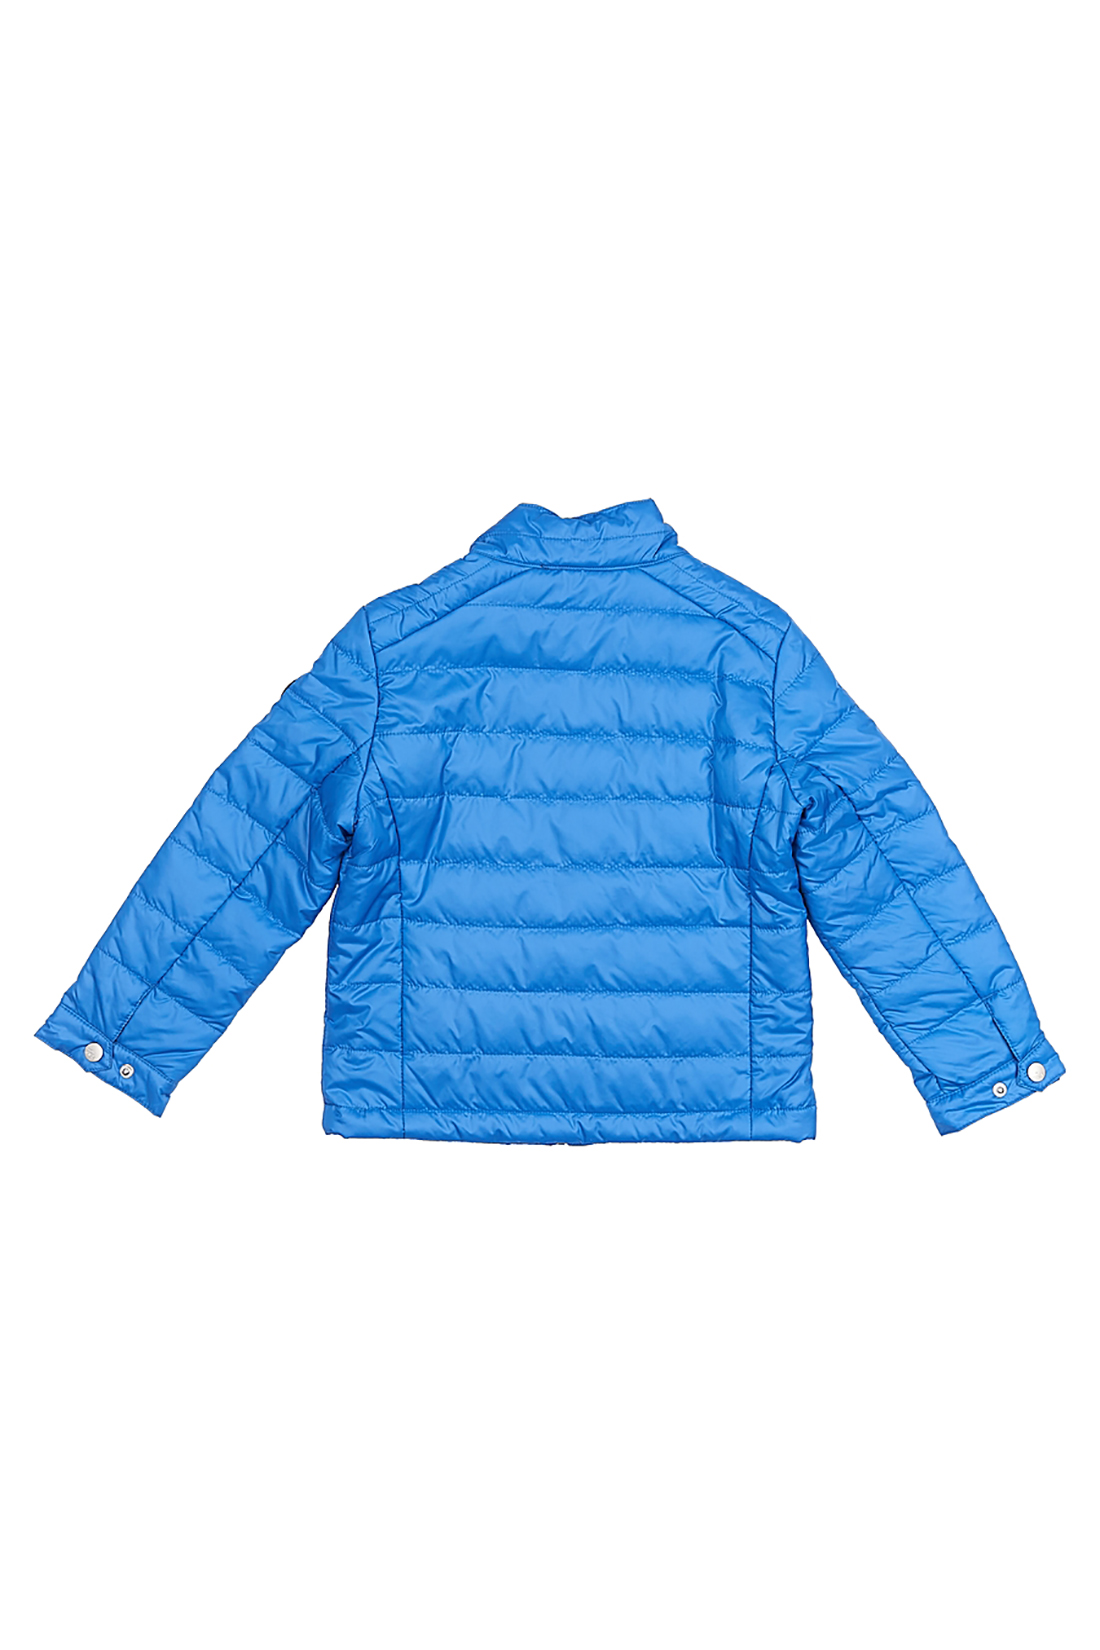 Куртка для мальчика (арт. baon BK538002), размер 122-128, цвет синий Куртка для мальчика (арт. baon BK538002) - фото 4